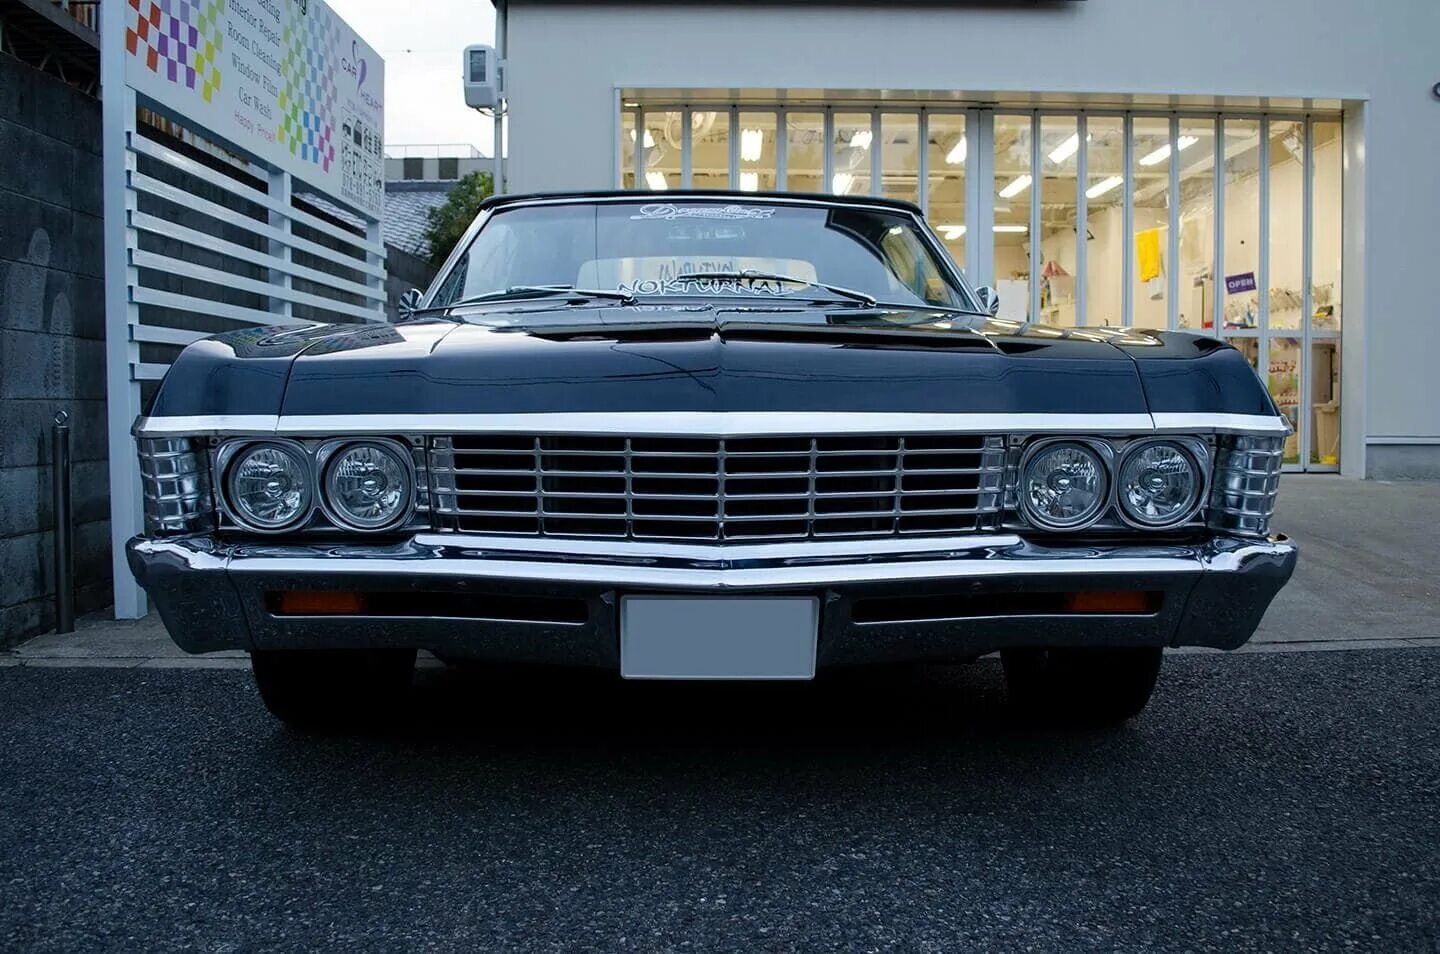 Chevrolet impala год. Шевроле Импала 1967. Shavrale Tempala 1967. Шевроле Импала 67. Шевроле Импала 1967 черная.